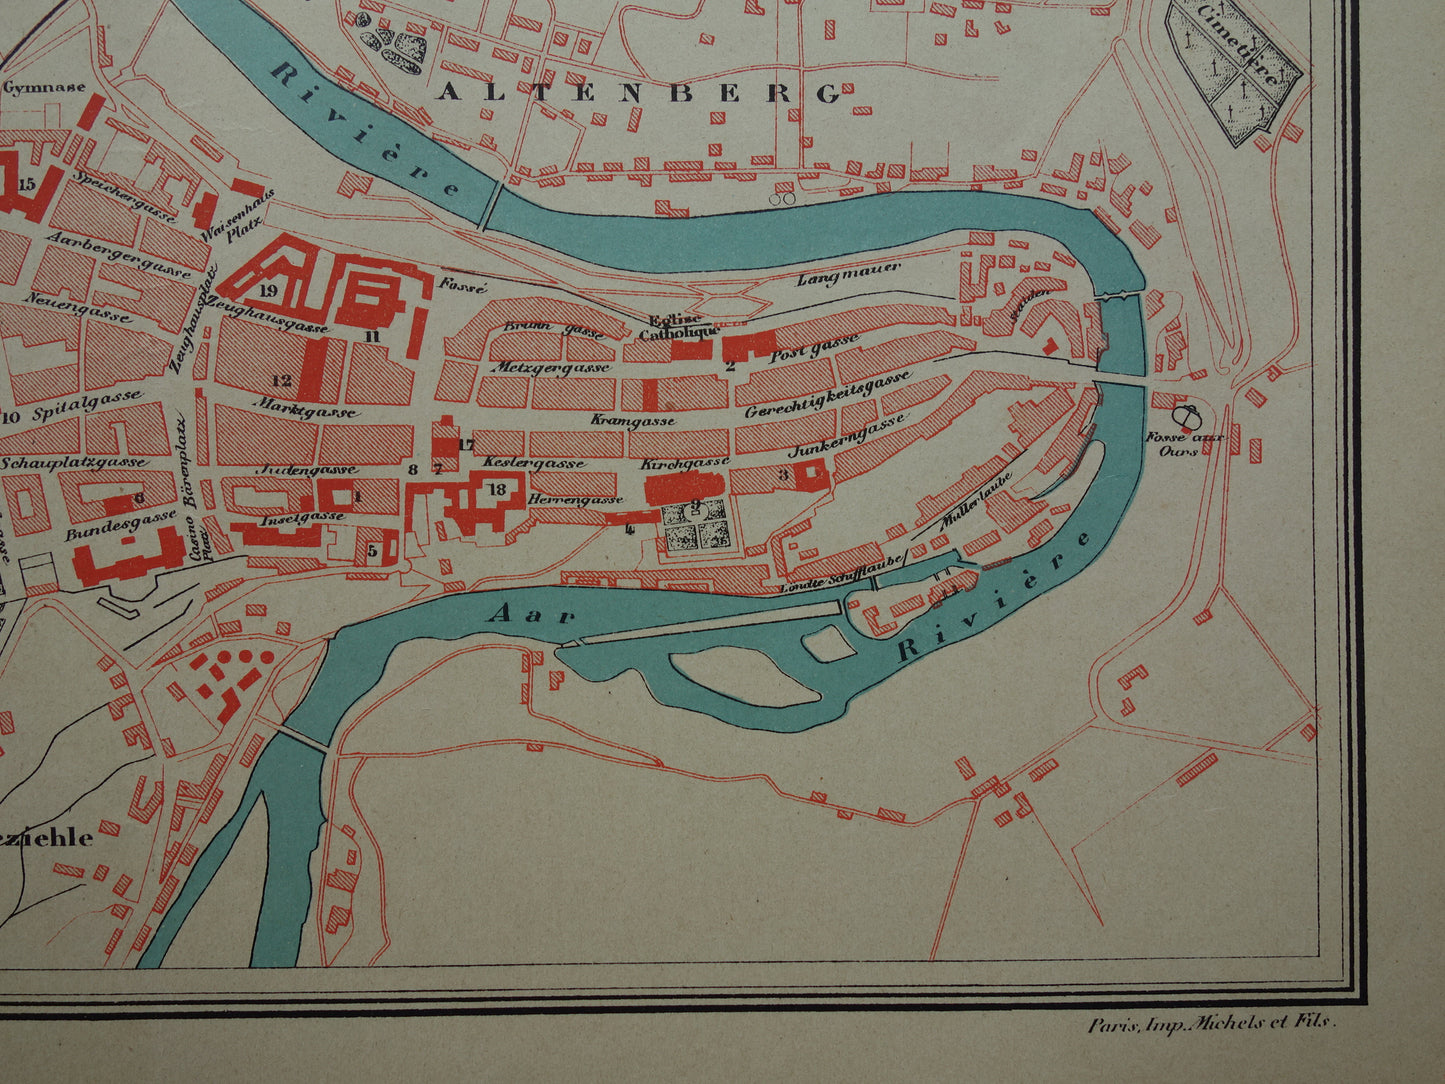 BERN oude kaart van Bern Zwitserland 1896 originele antieke Franse plattegrond van Bern